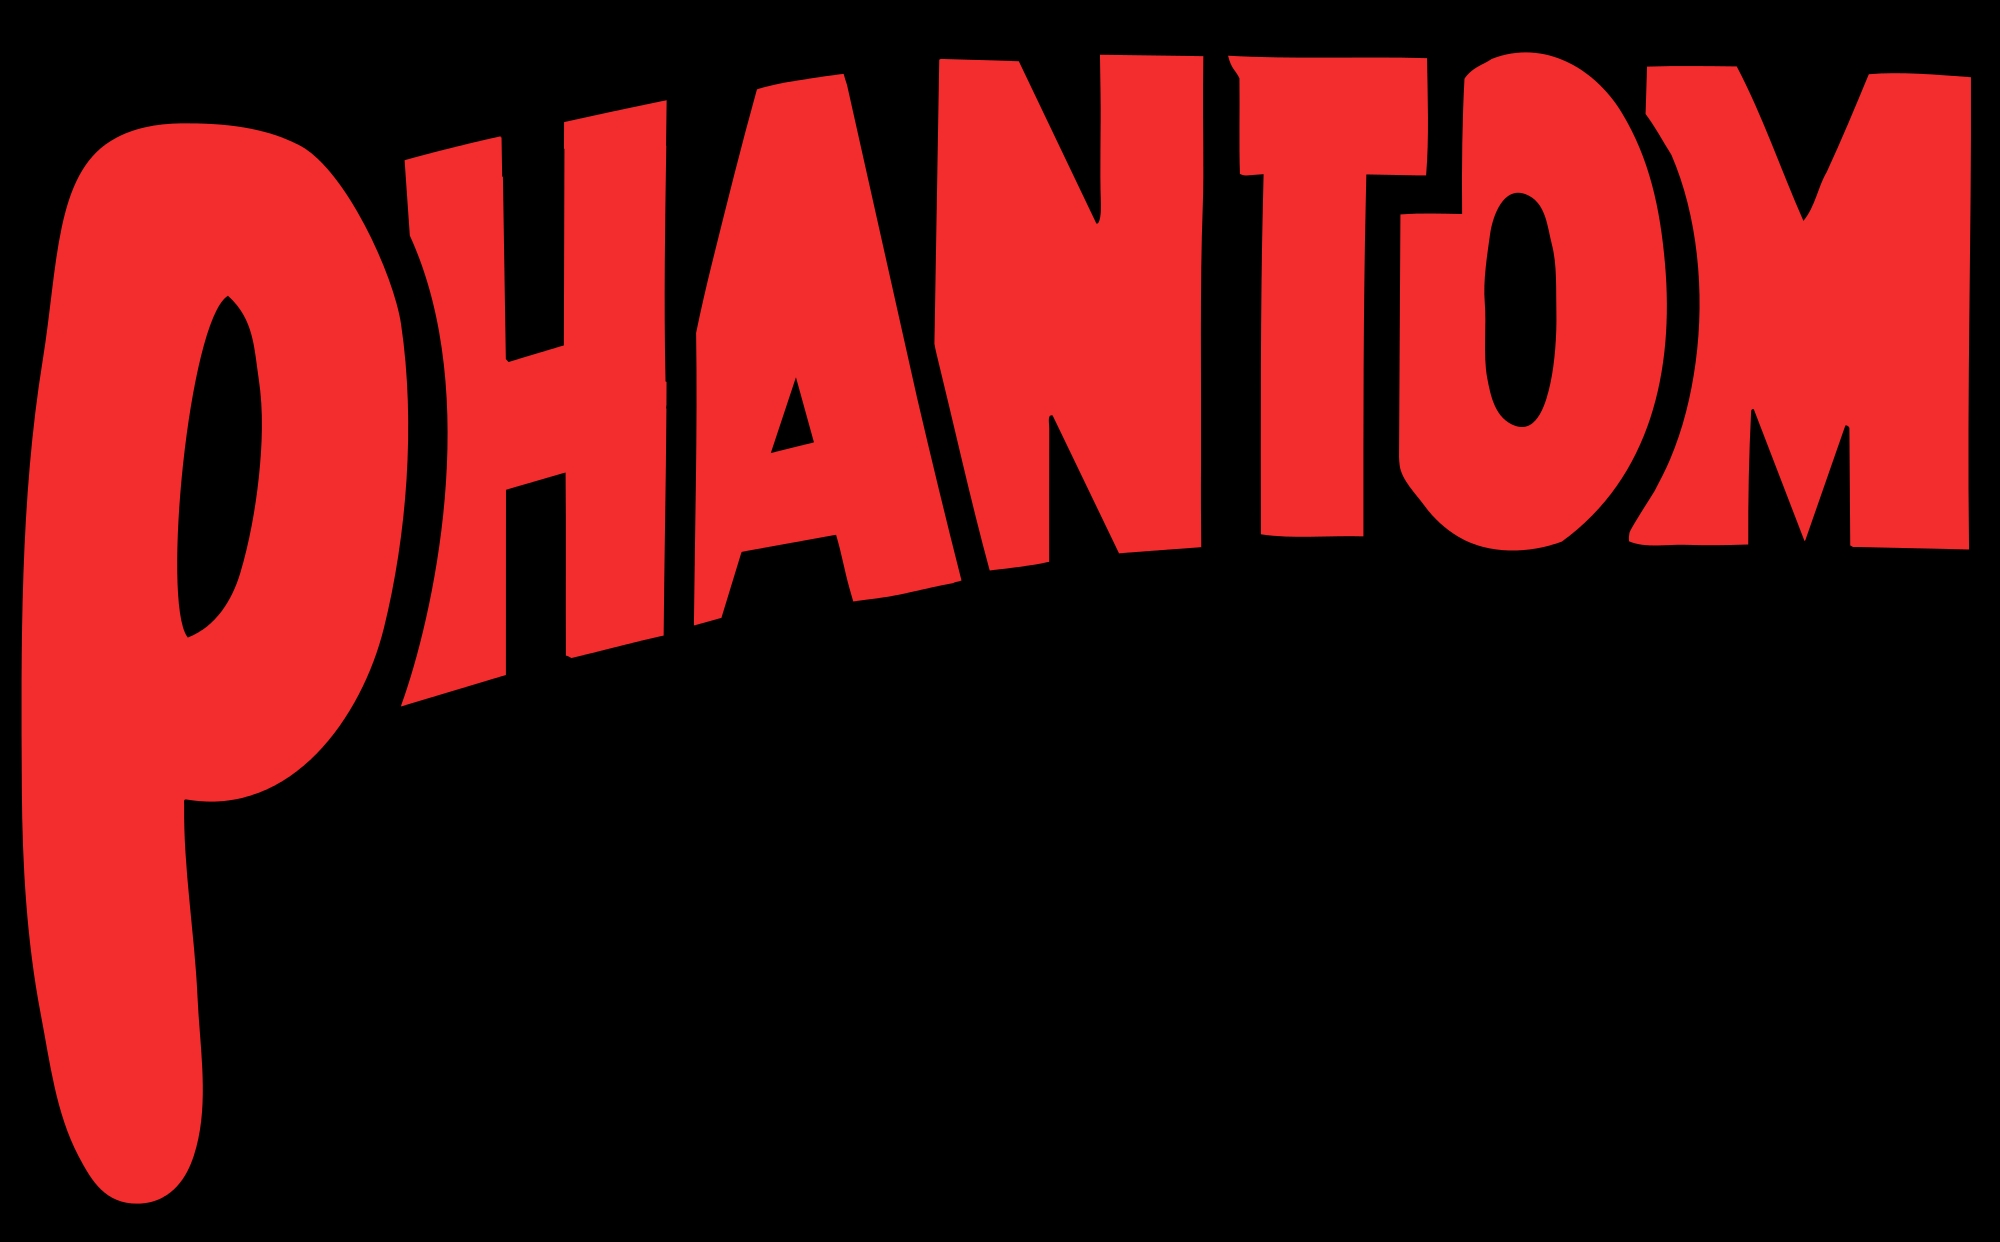 the phantom, comics